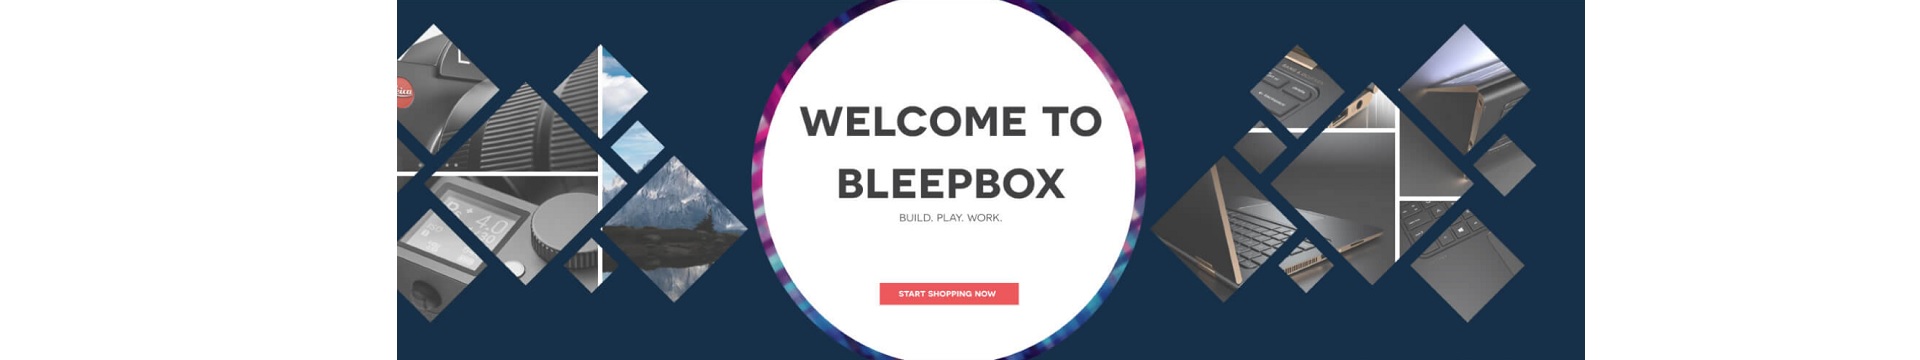 Welcome to Bleepbox - Build. Play. Work